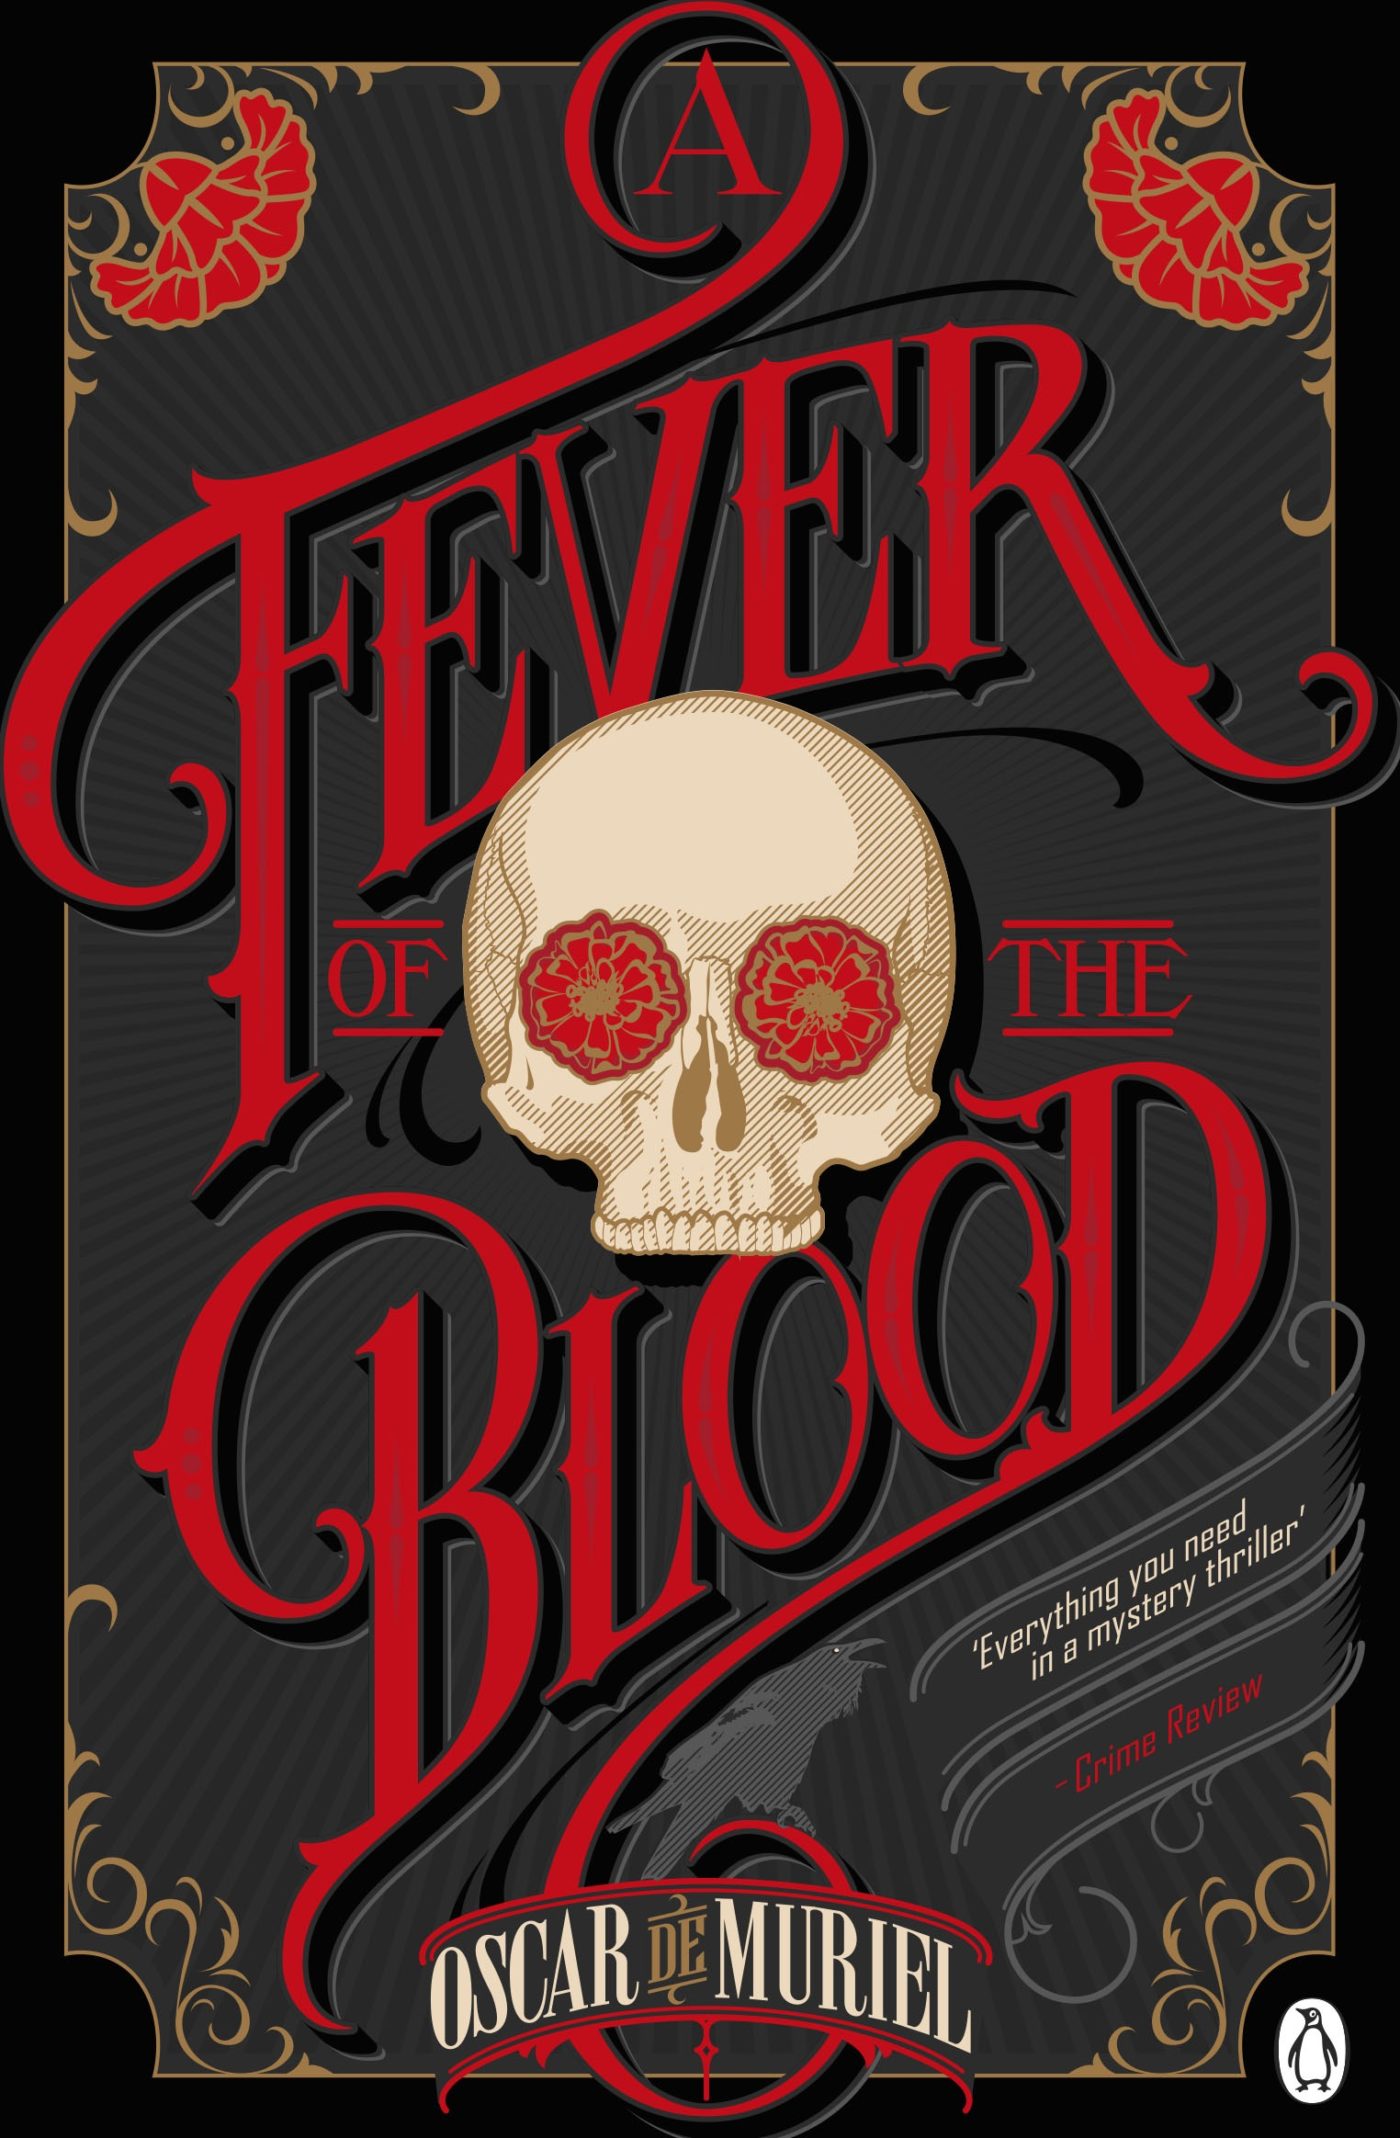 A Fever of the Blood by Oscar de Muriel